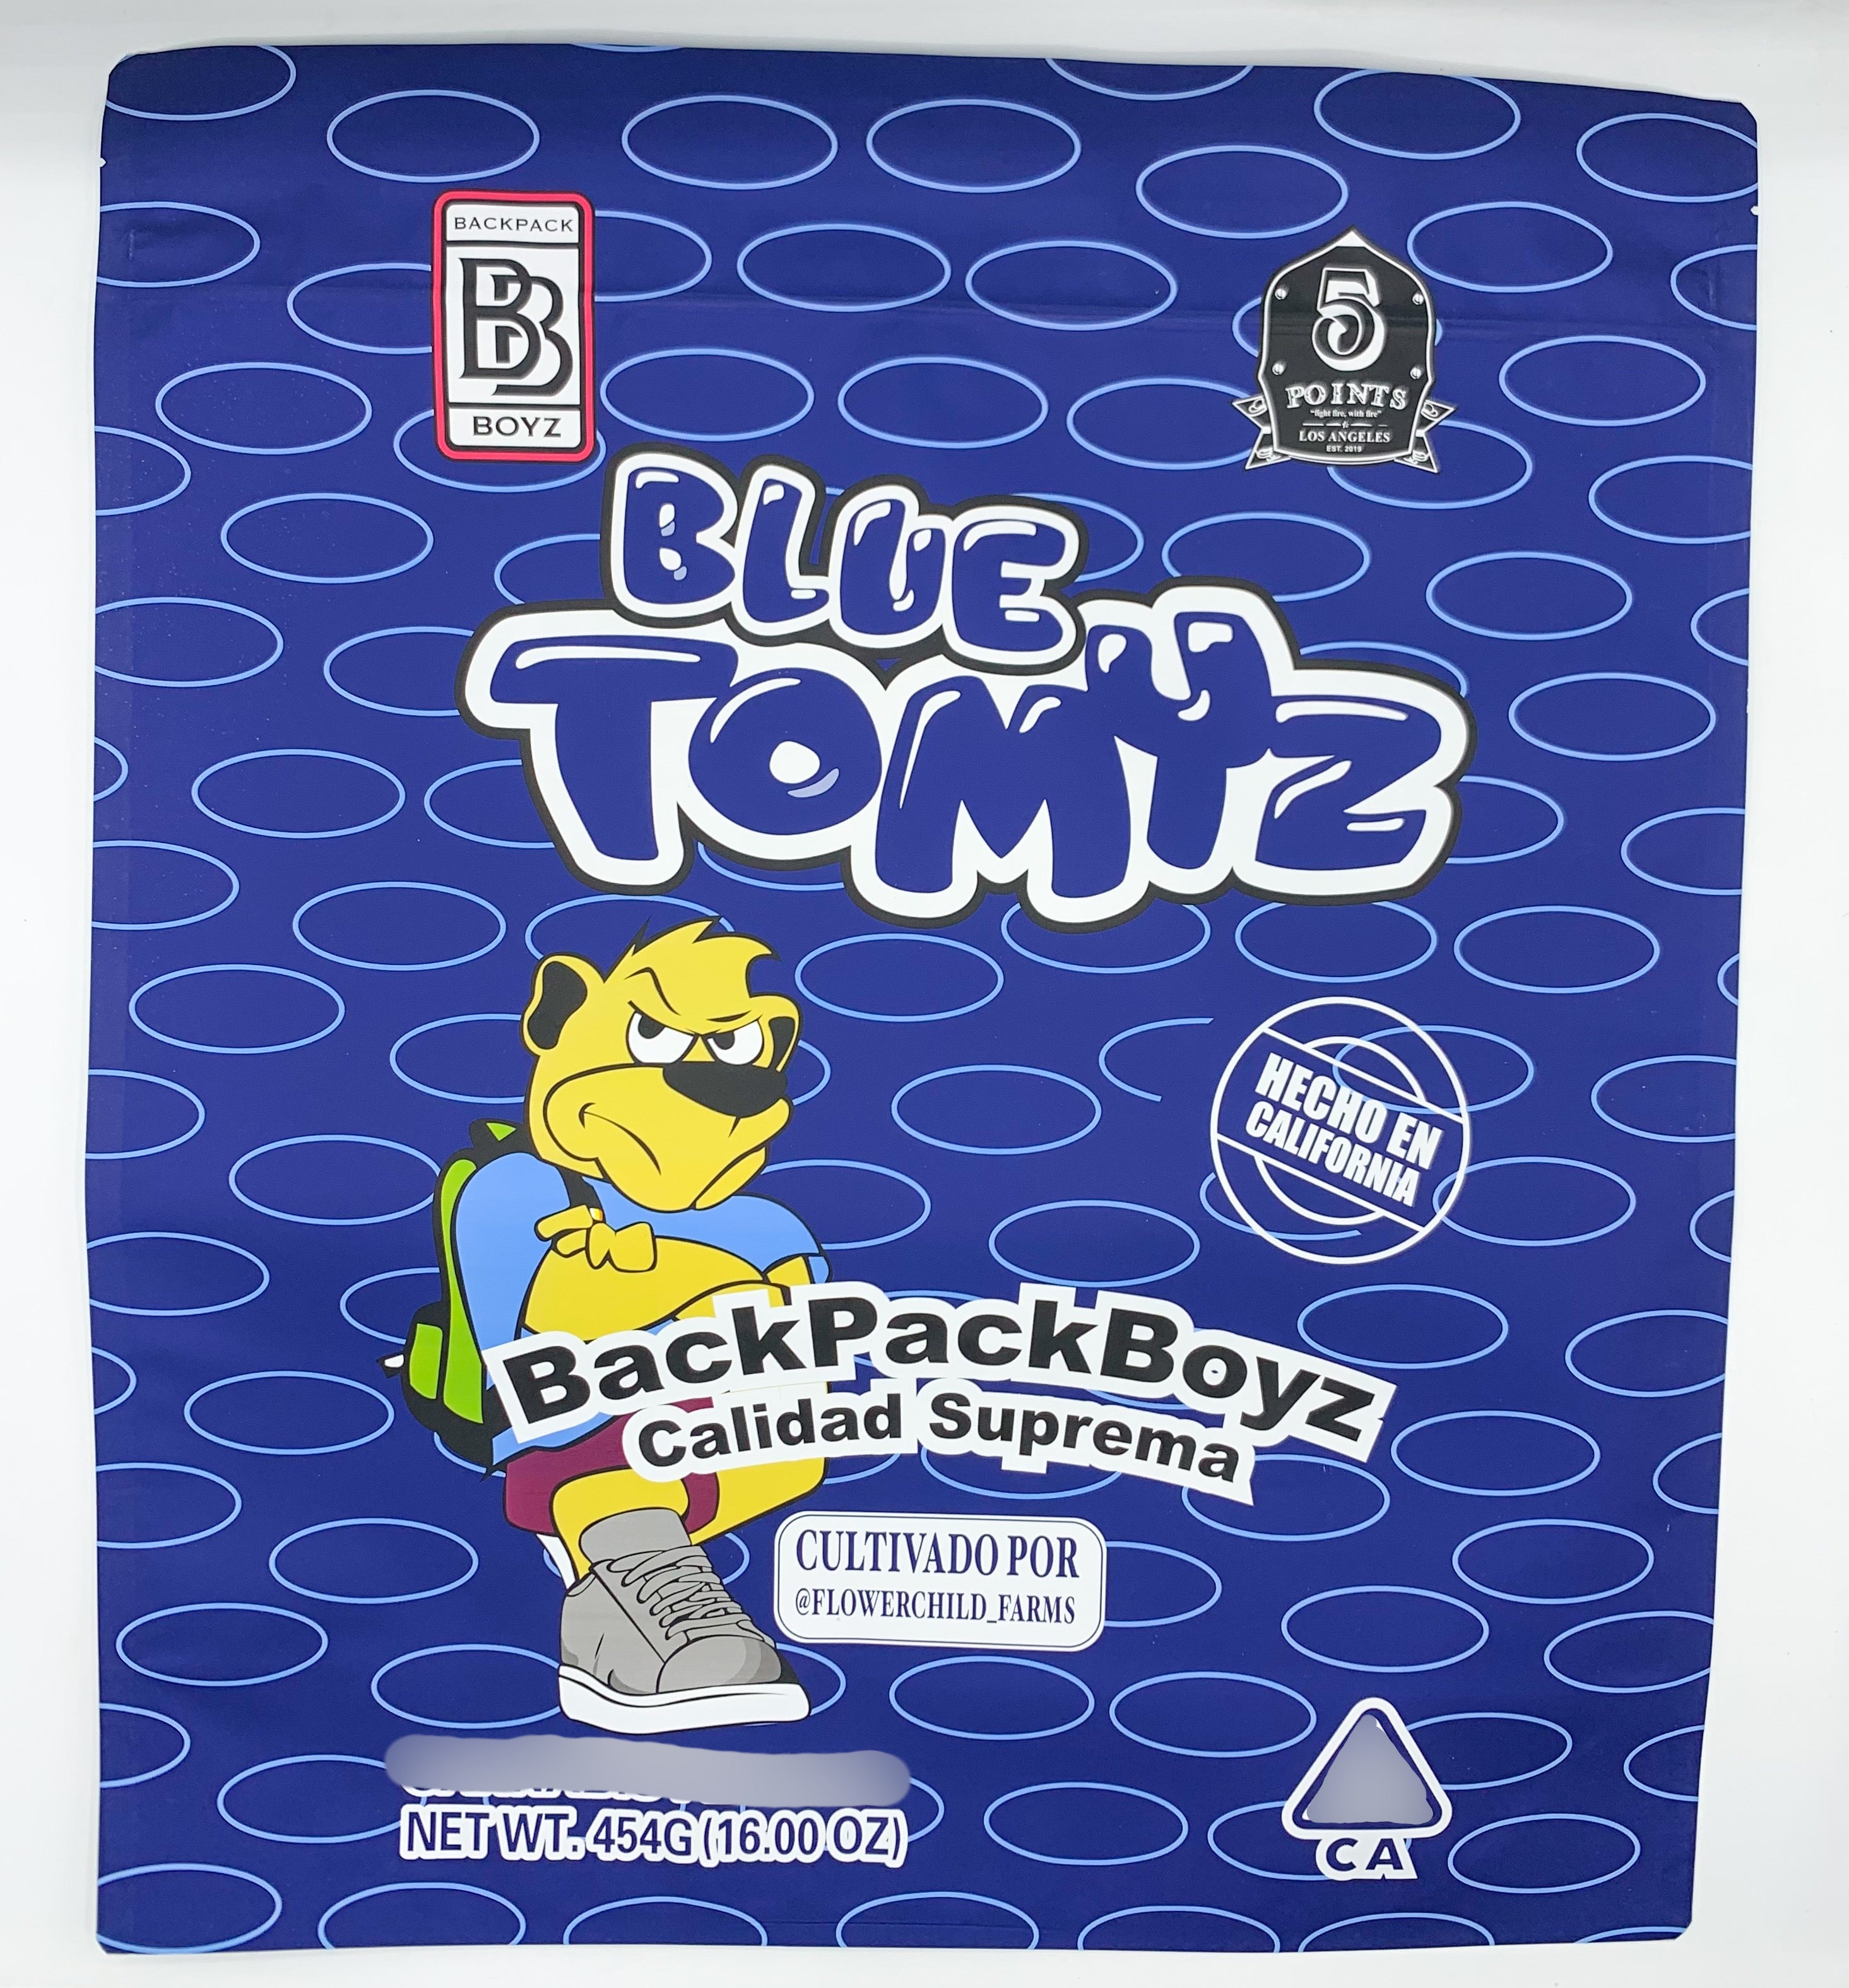 Backpack Boyz Blue Tomyz 1 pound (16oz) Mylar bags